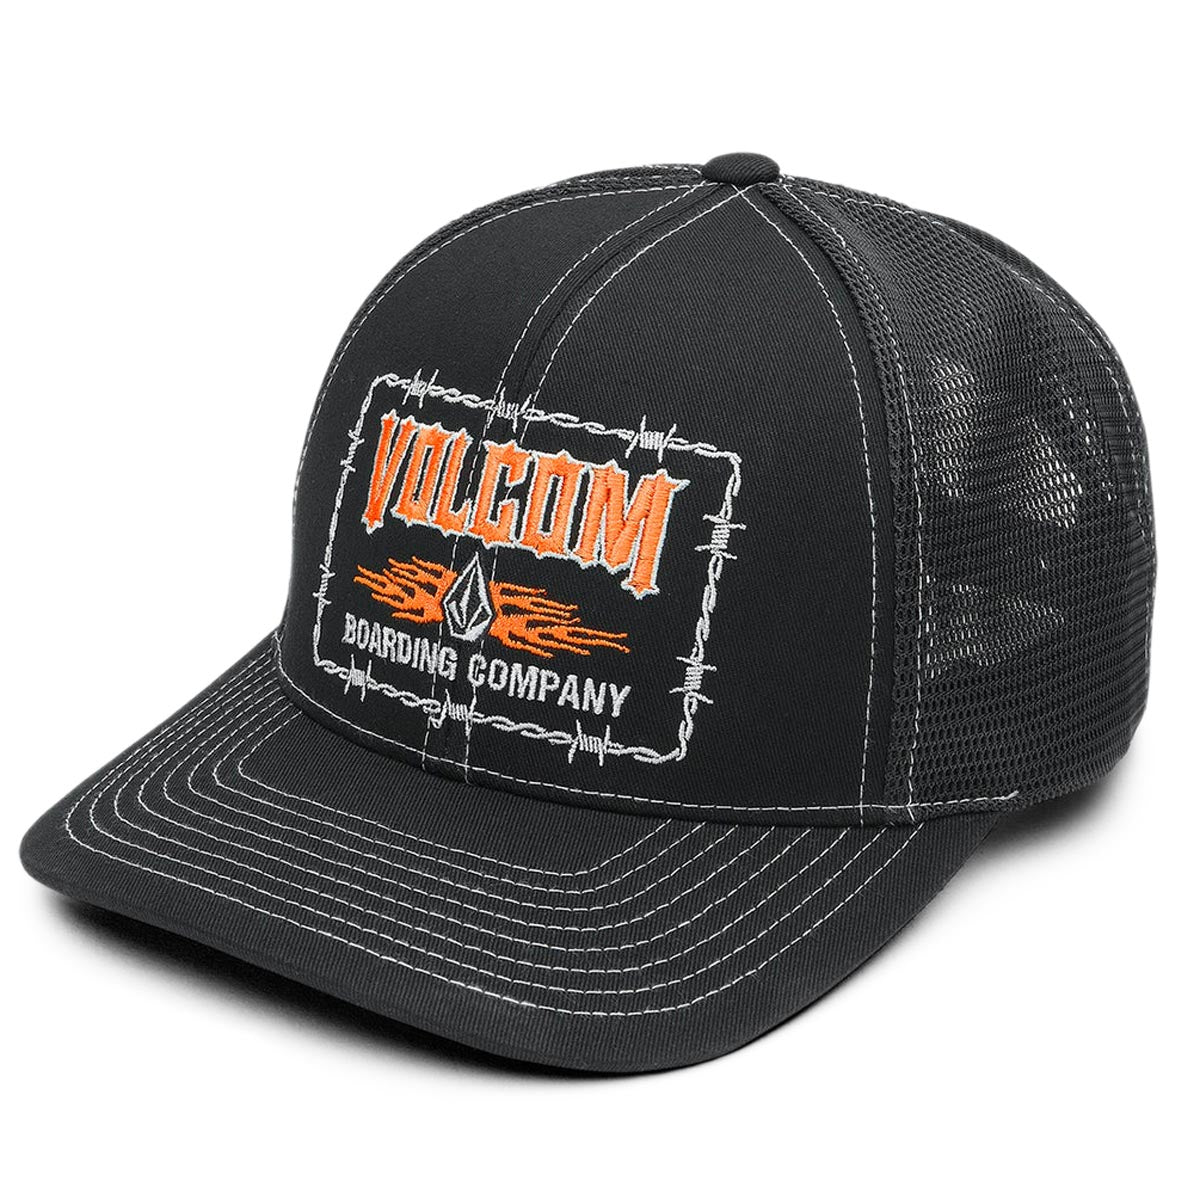 Volcom Barb Stone Trucker Hat - Black image 1